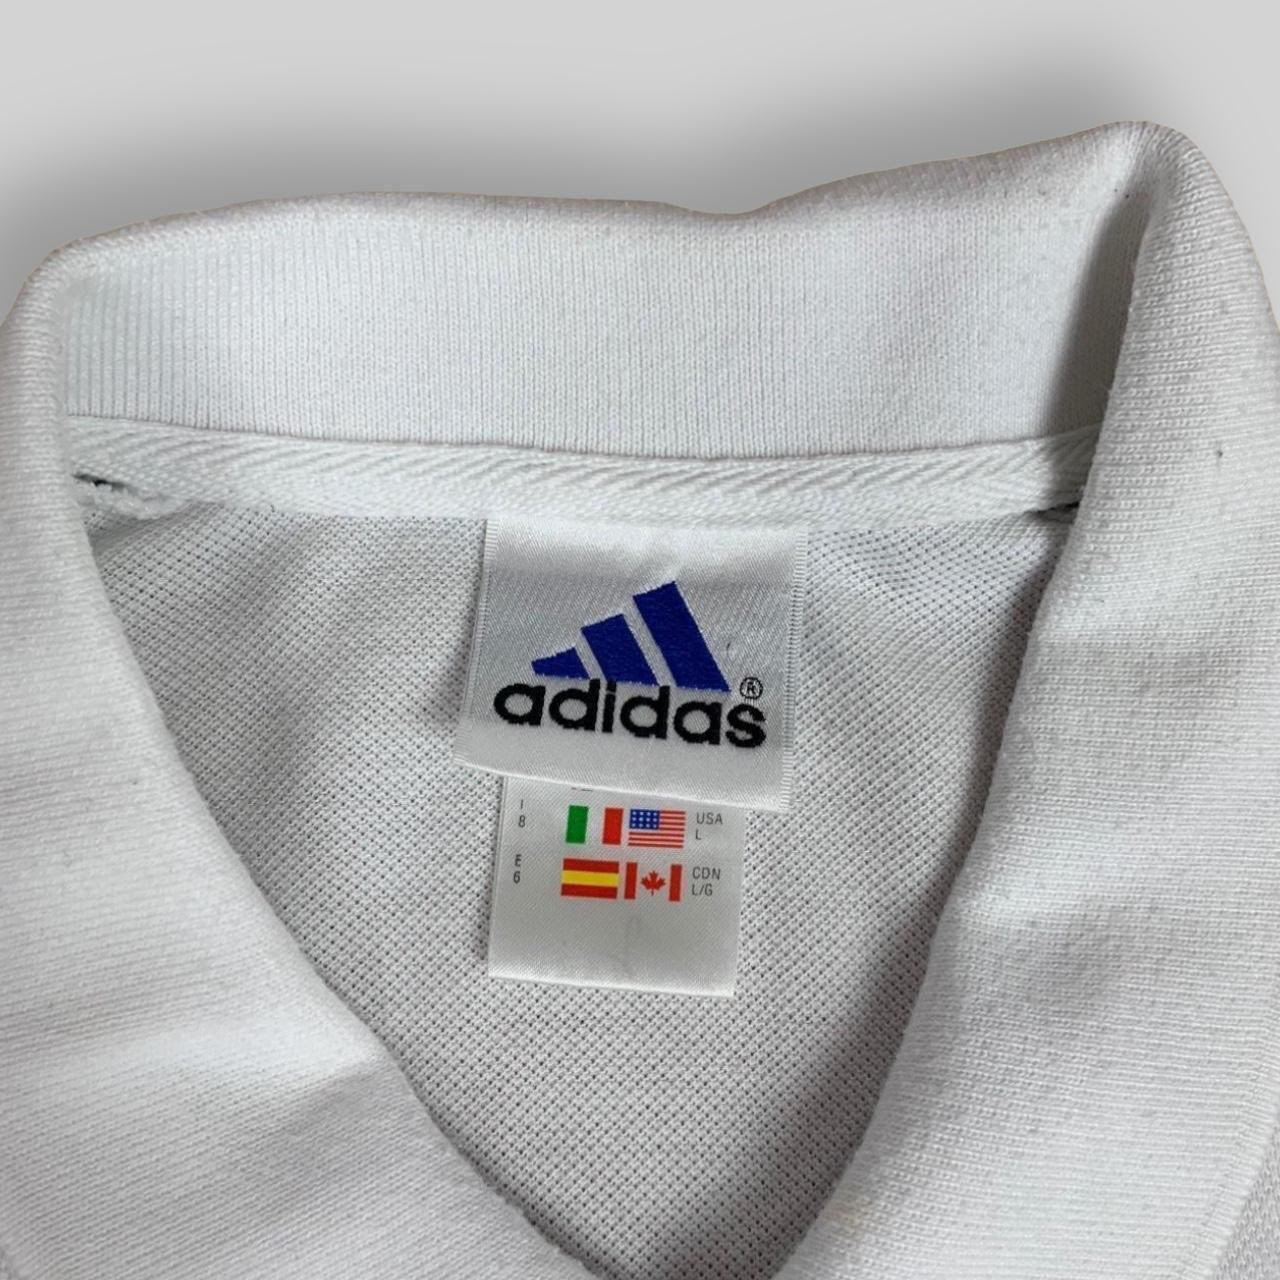 Vintage Adidas Polo Shirt (XL)